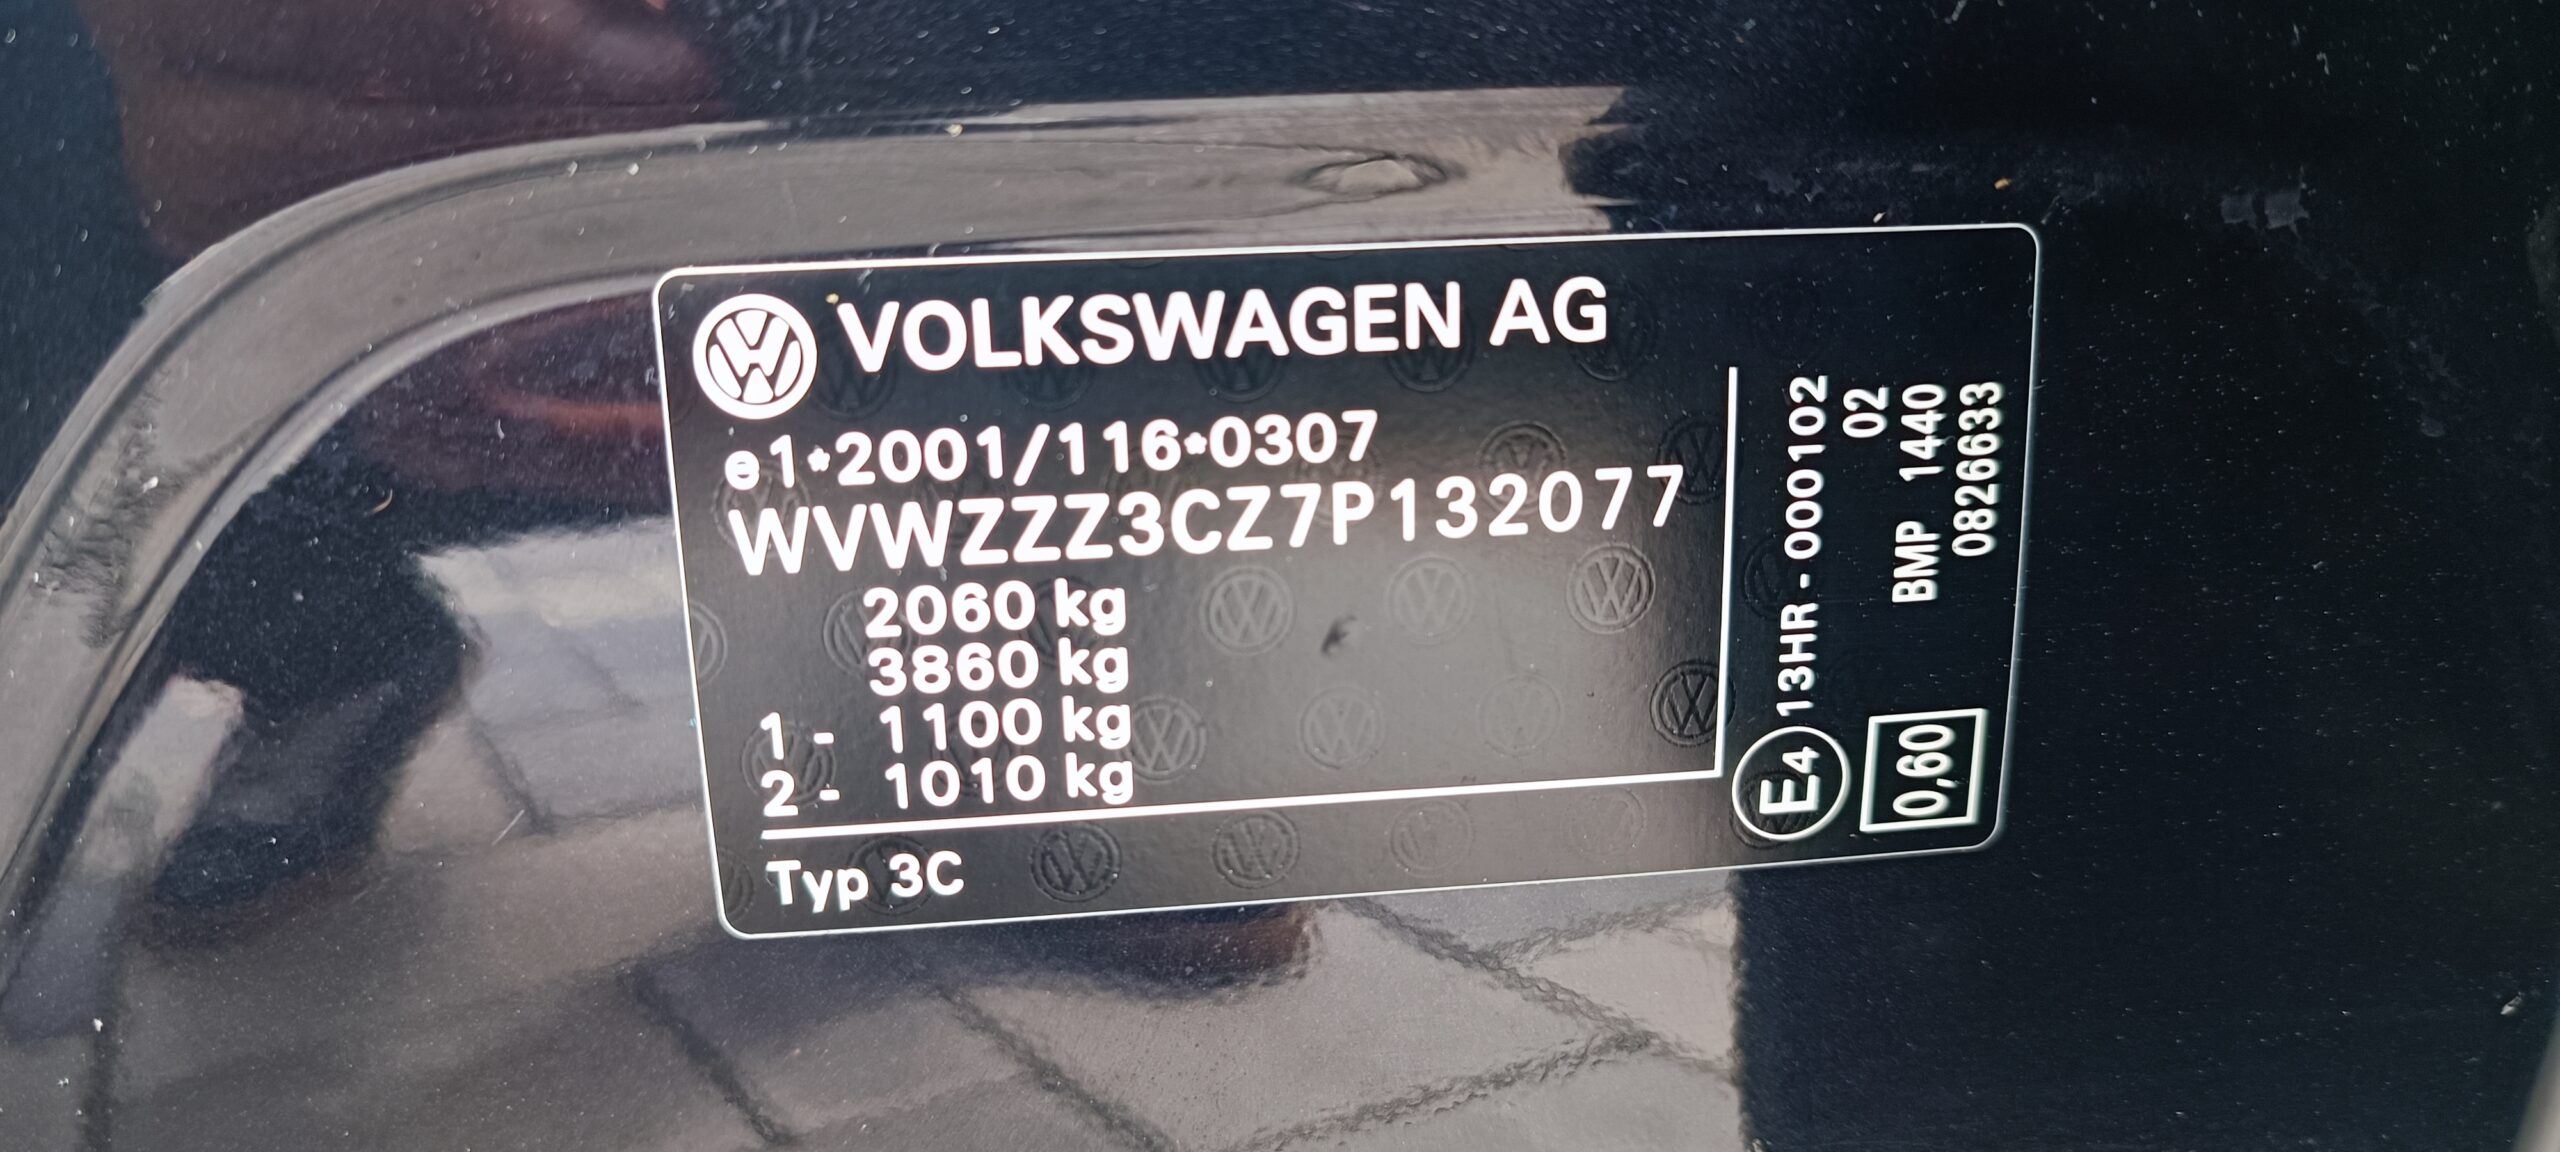 VW PASSAT HIGHLINE 2.0 TDI